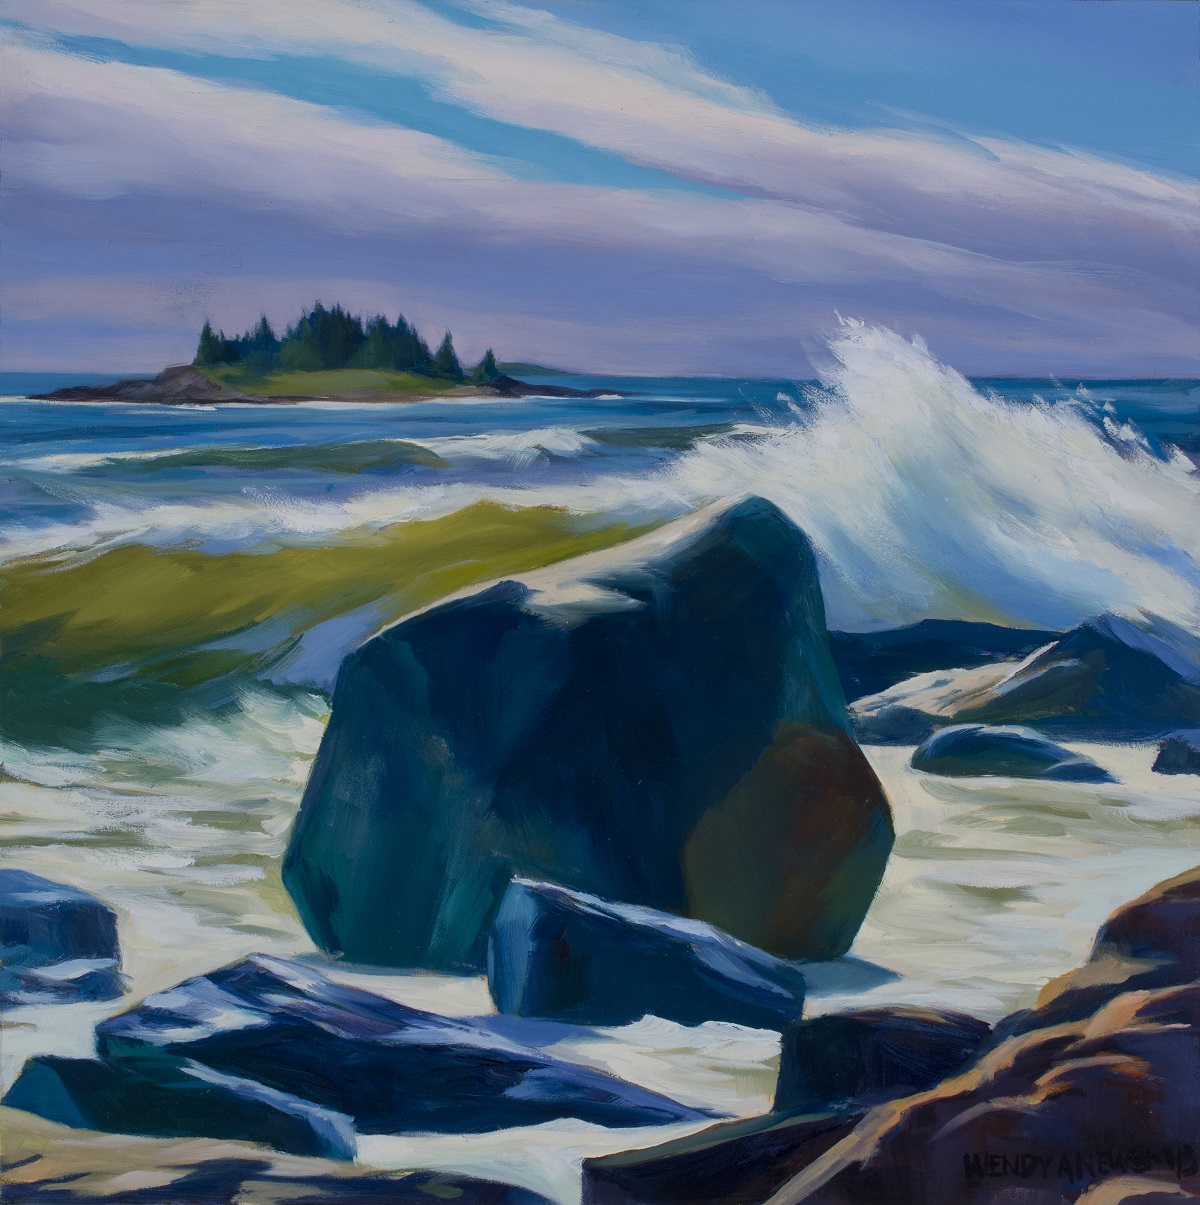  Summer Surf  Oil on panel  10 x 10”  $850  Sold 